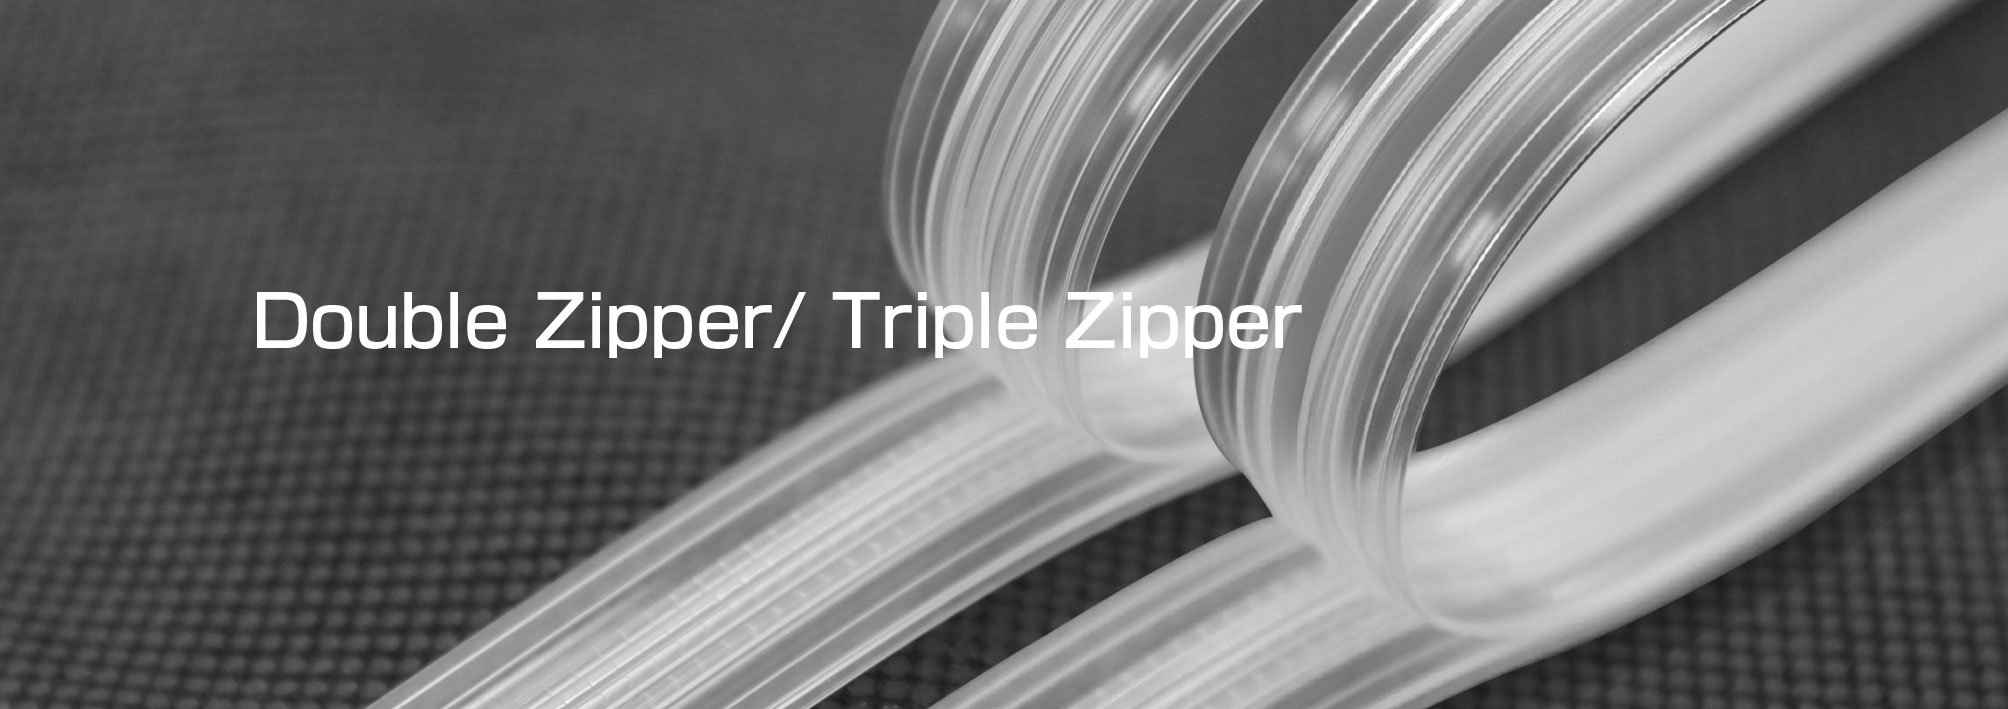 Double Zipper and Triple Zipper